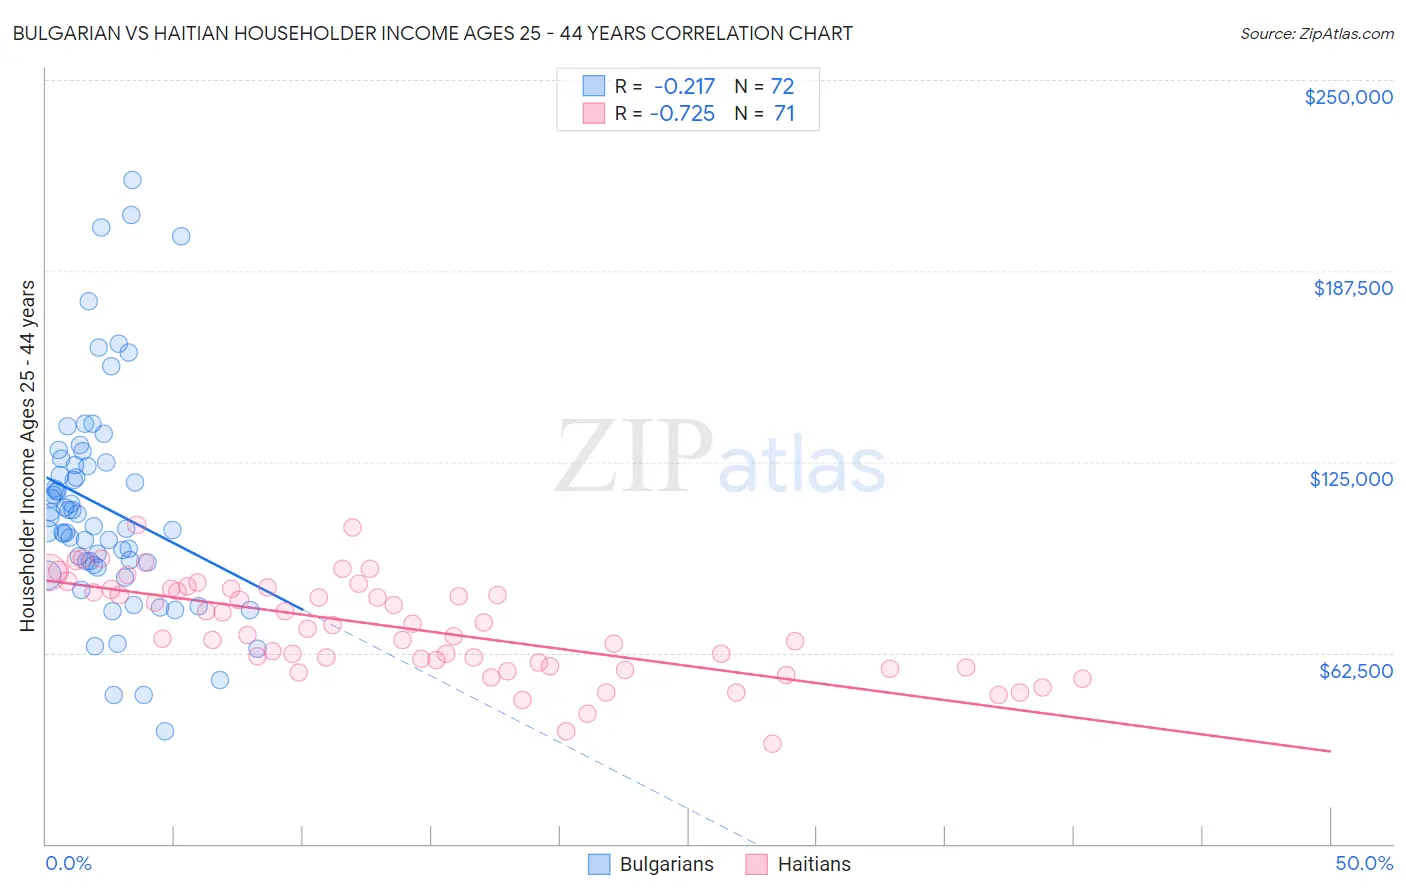 Bulgarian vs Haitian Householder Income Ages 25 - 44 years